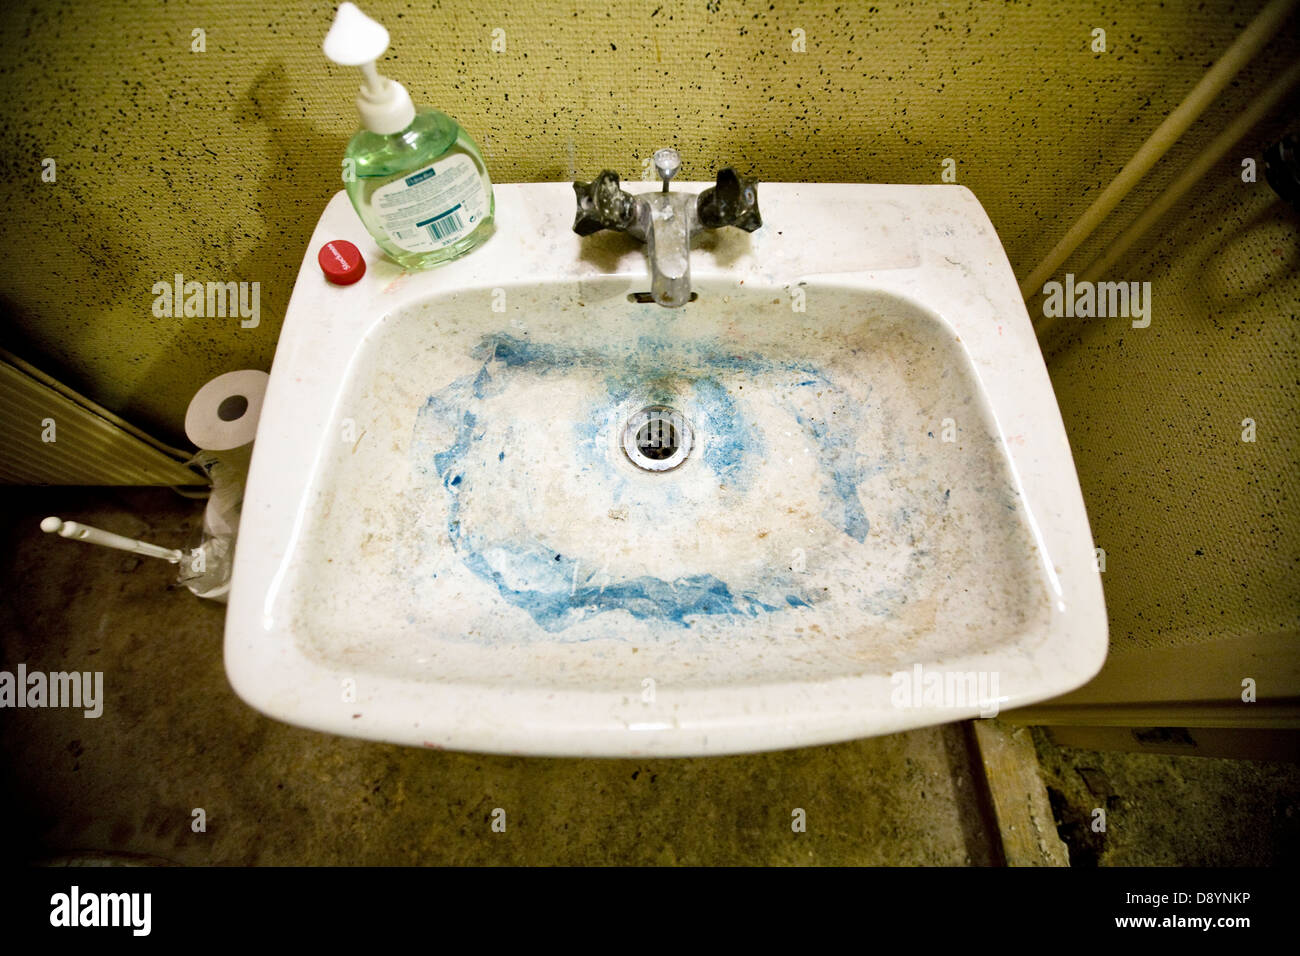 are bathroom sinks dirty